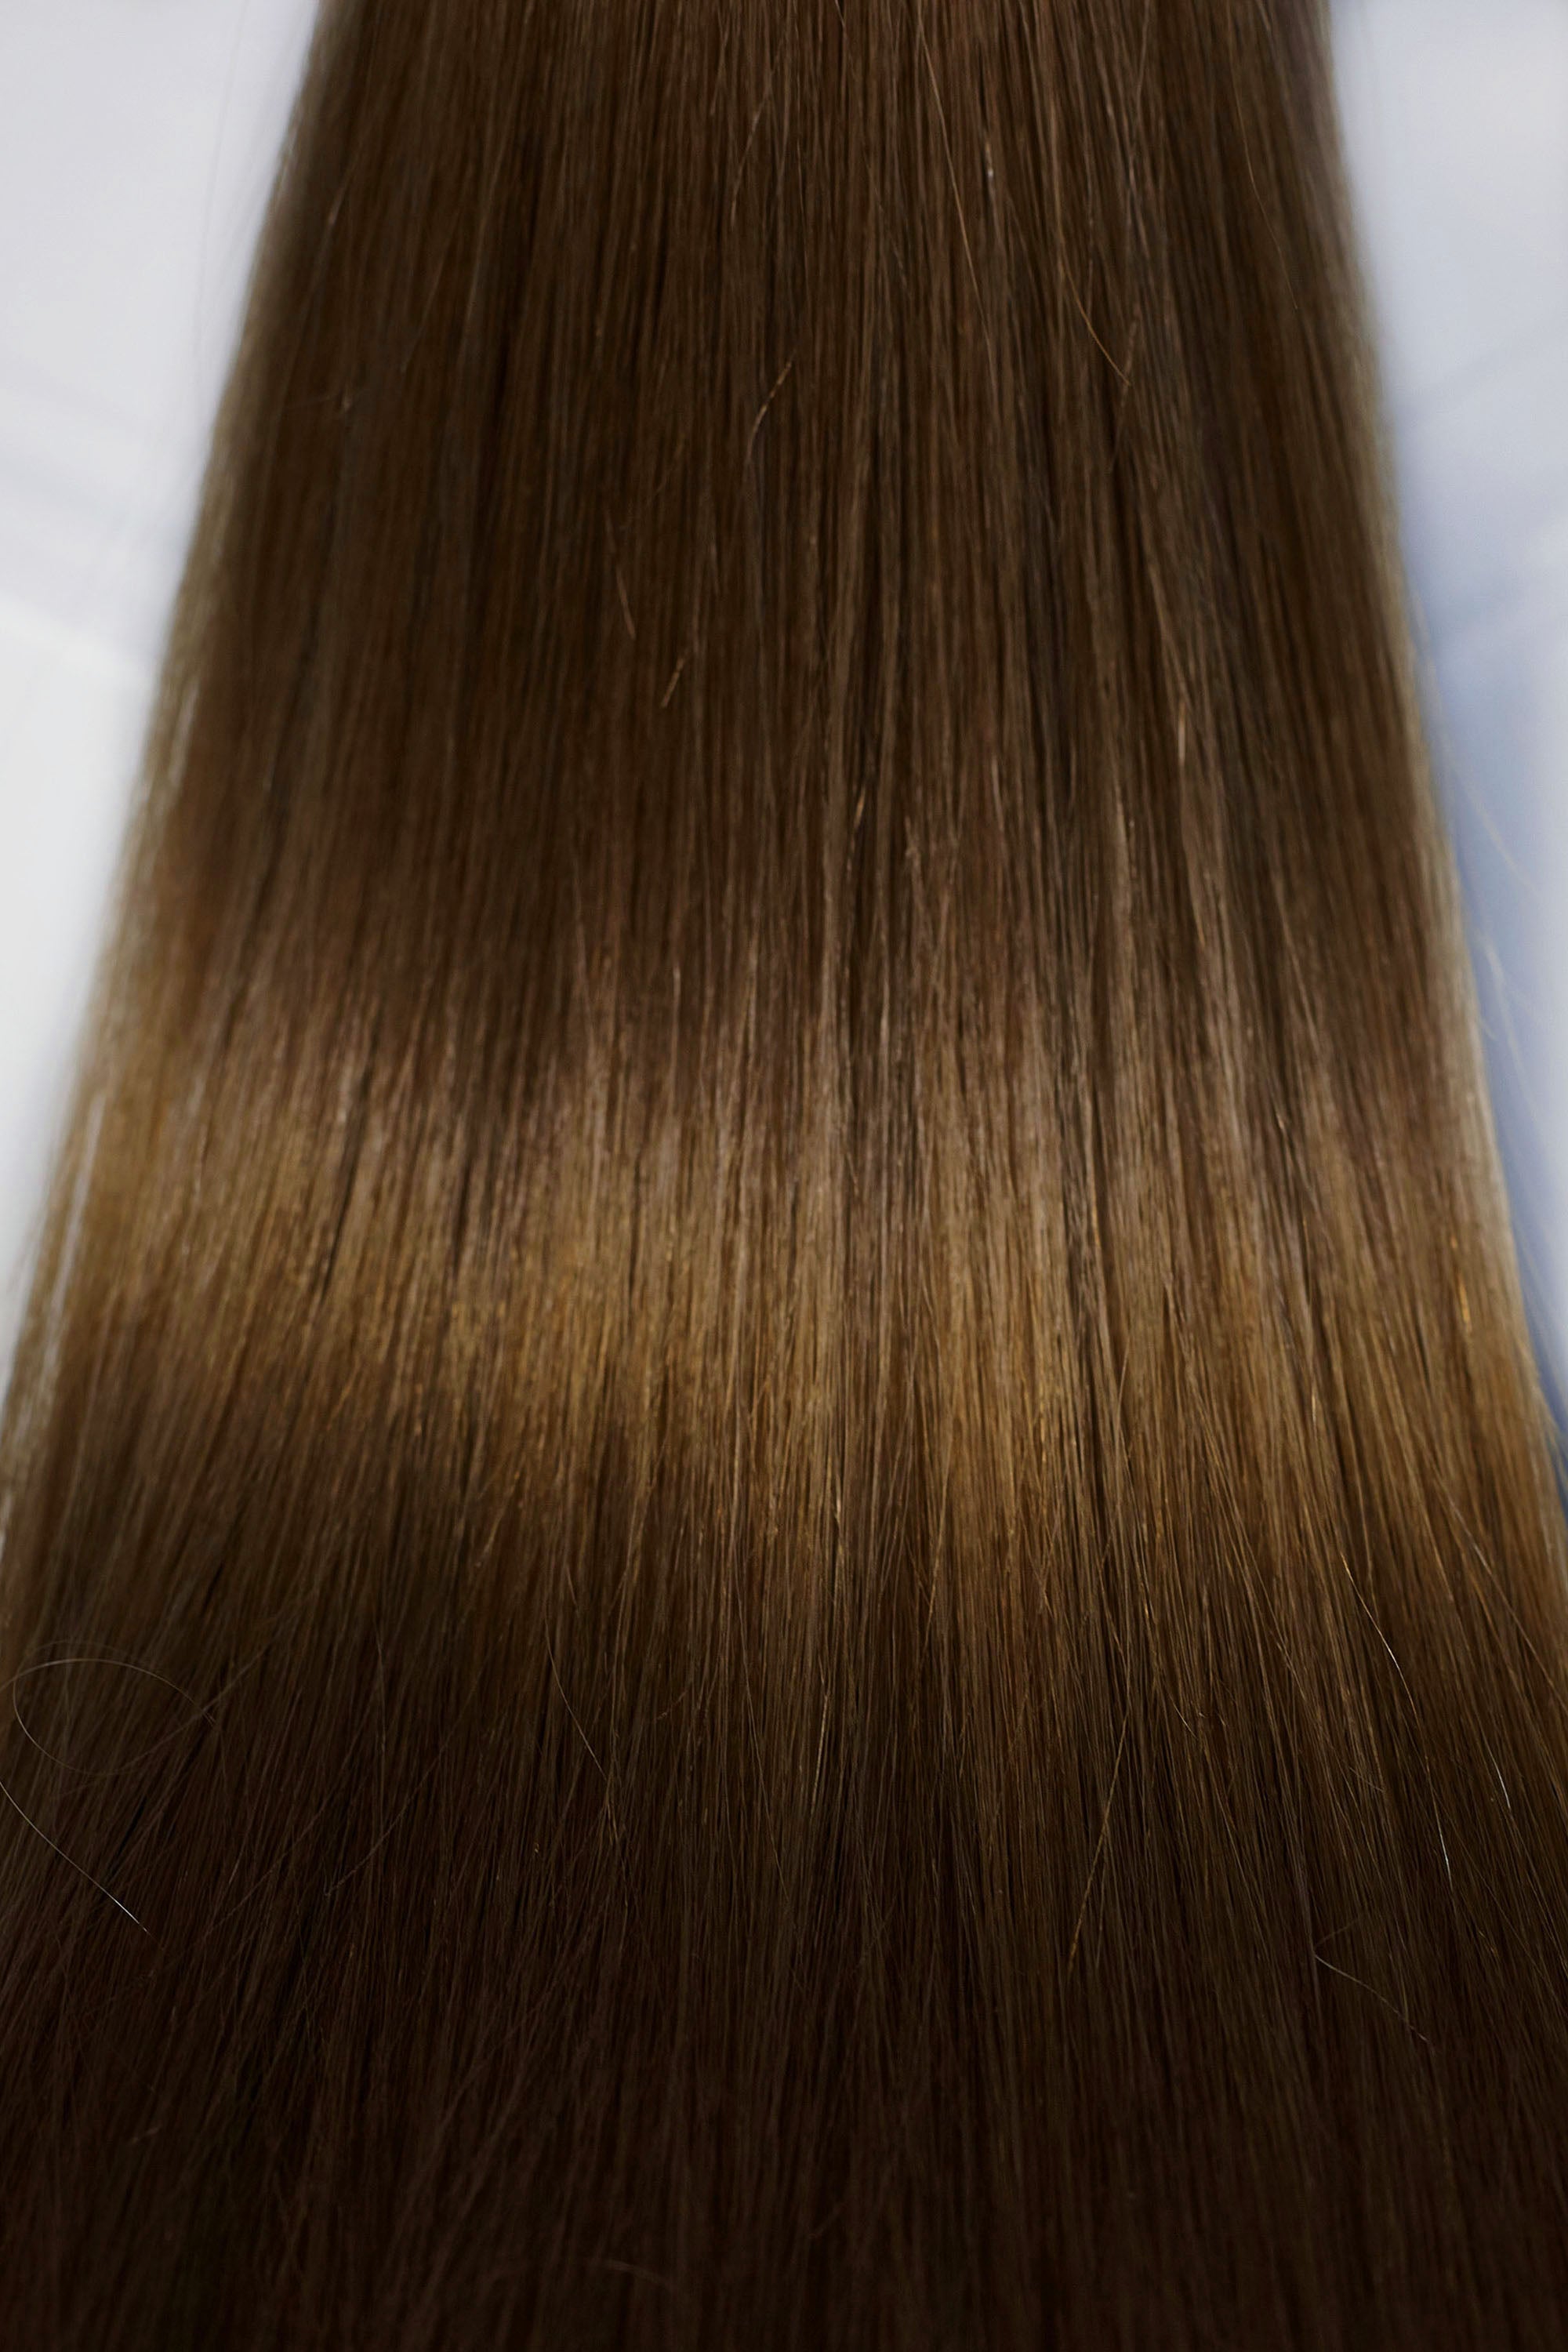 Behair professional Keratin Tip "Premium" 26" (65cm) Natural Straight Honey Walnut Brown #5 - 25g (1g each pcs) hair extensions